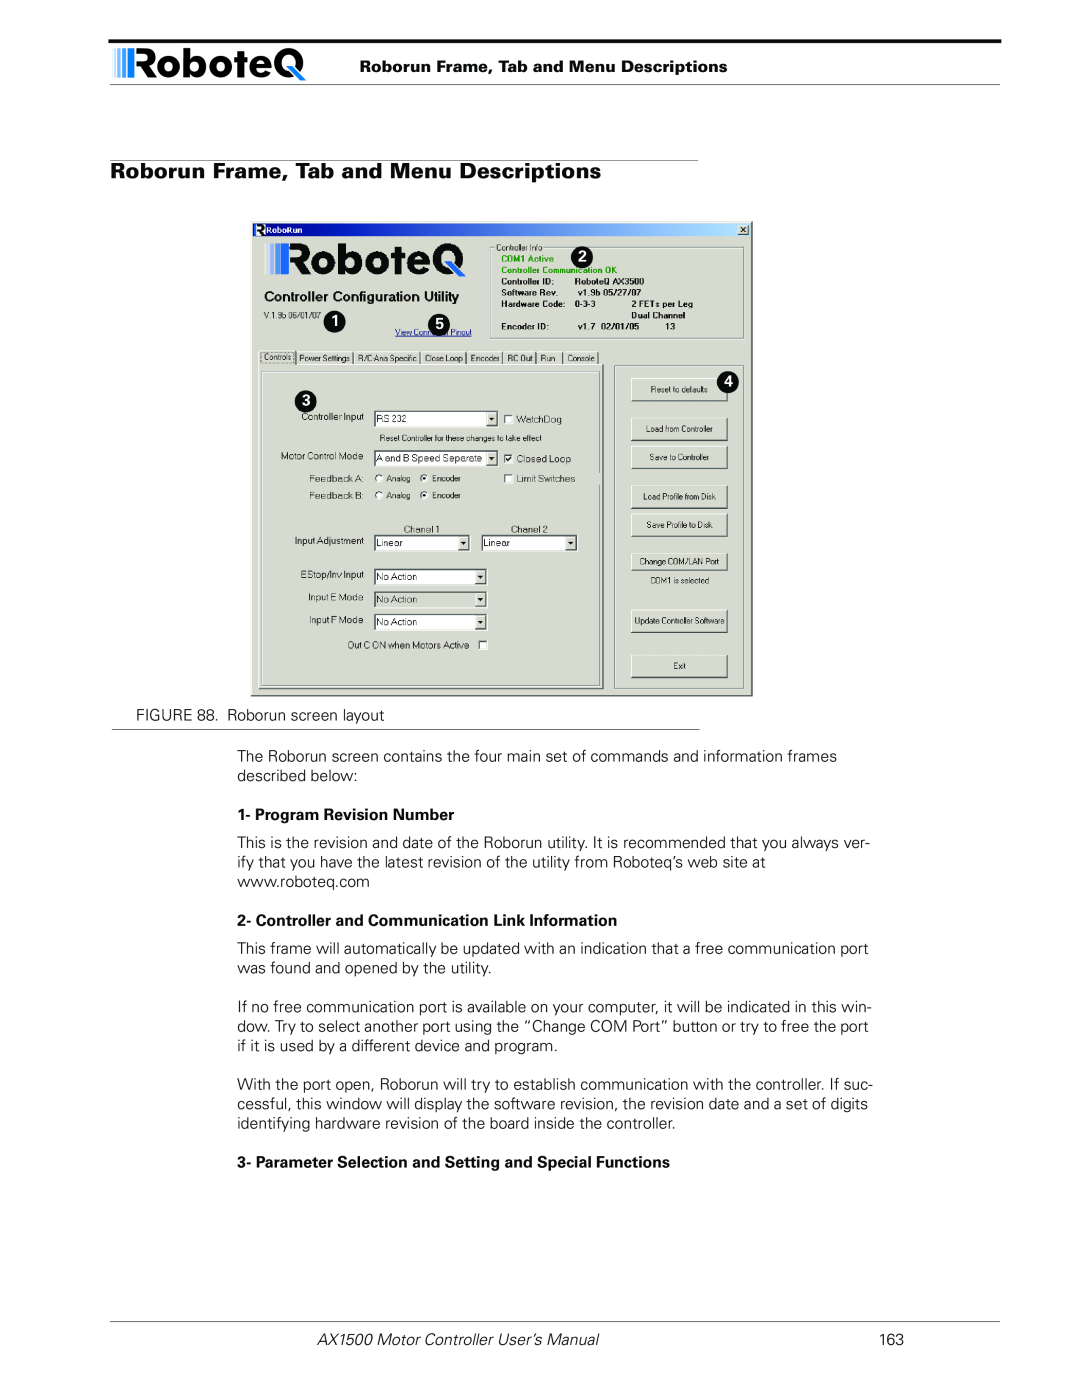 RoboteQ Roborun Frame, Tab and Menu Descriptions, Program Revision Number, AX1500 Motor Controller User’s Manual 